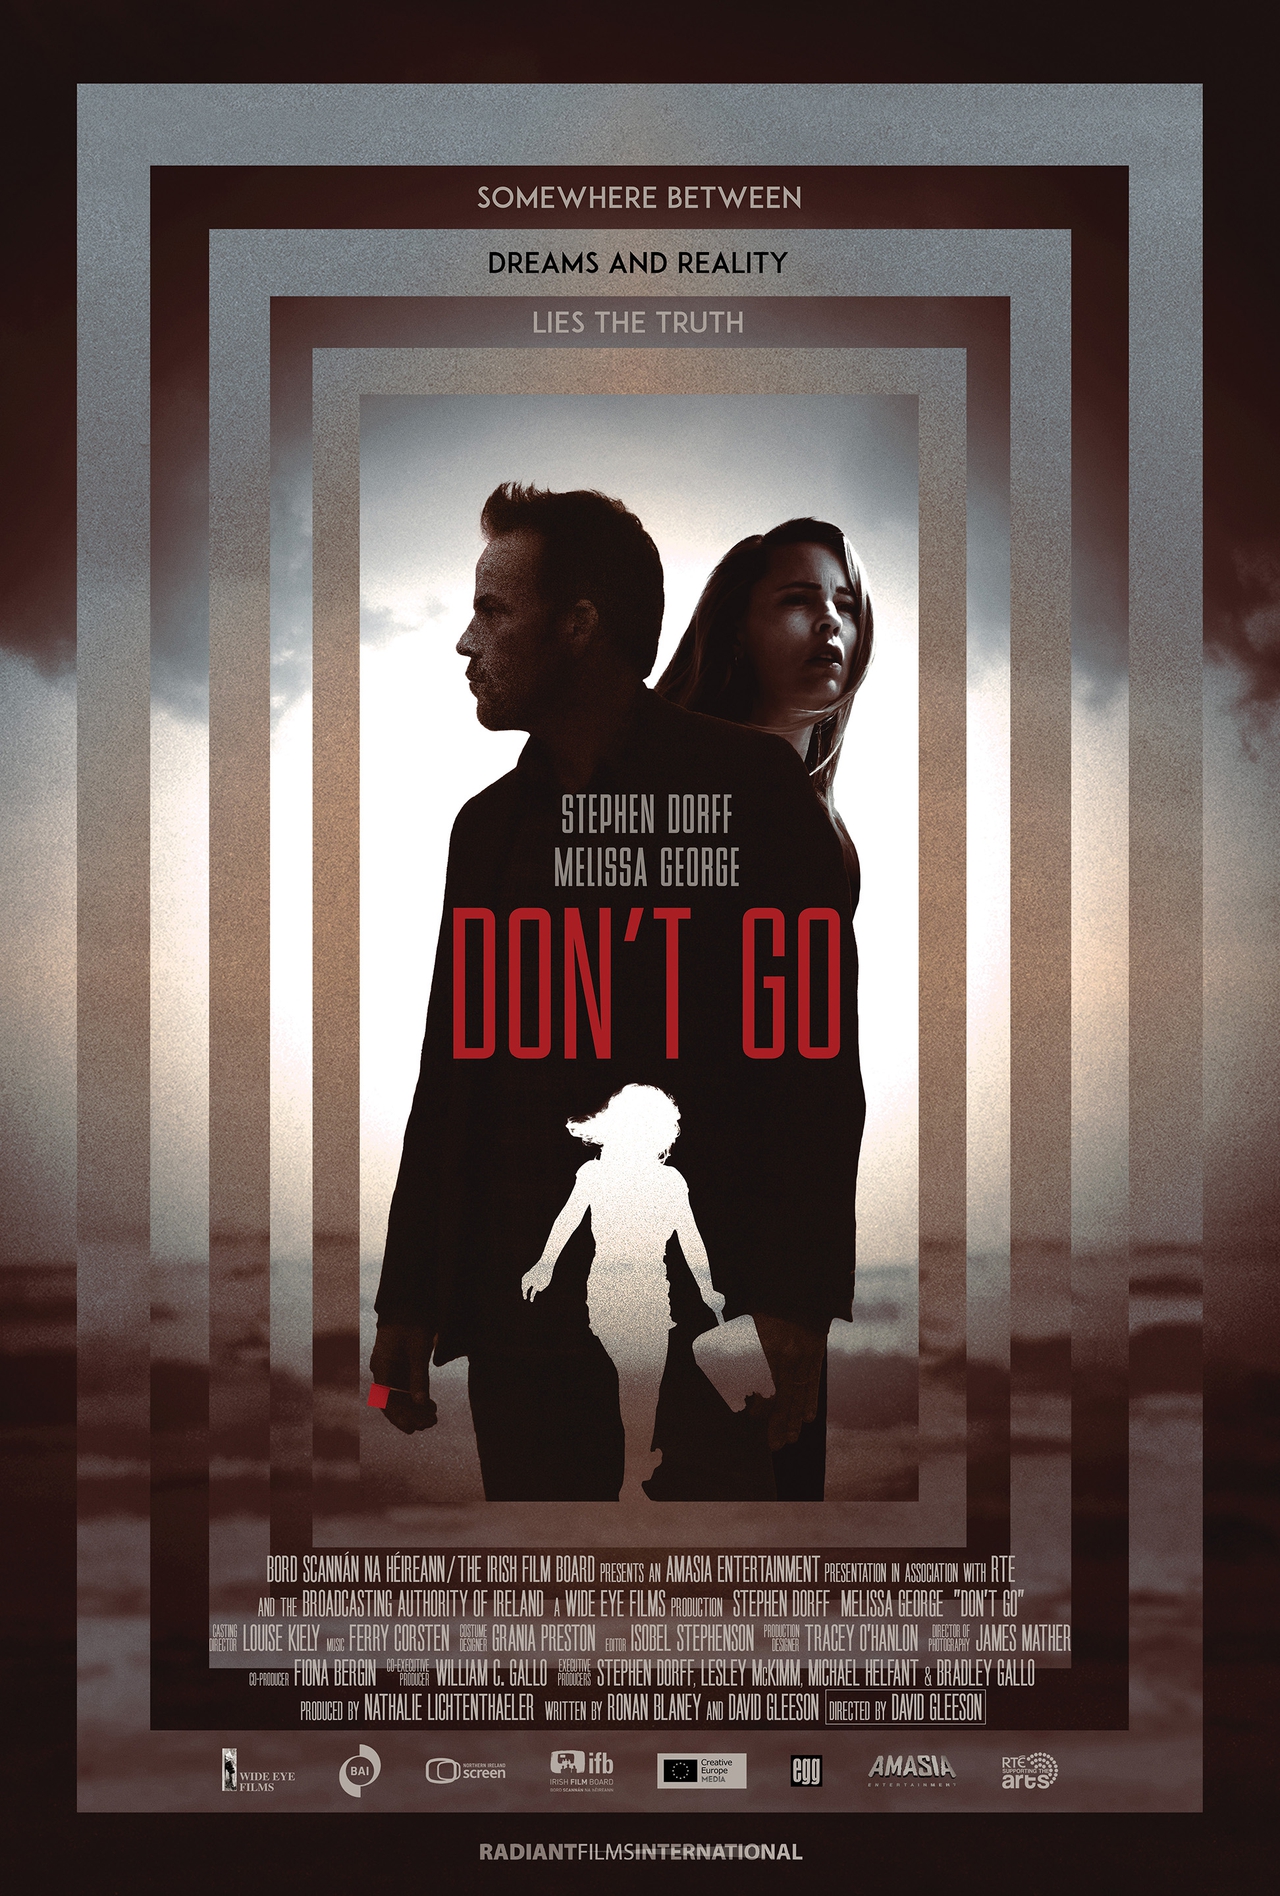 Stephen Dorff در صحنه فیلم سینمایی Don't Go به همراه Melissa George